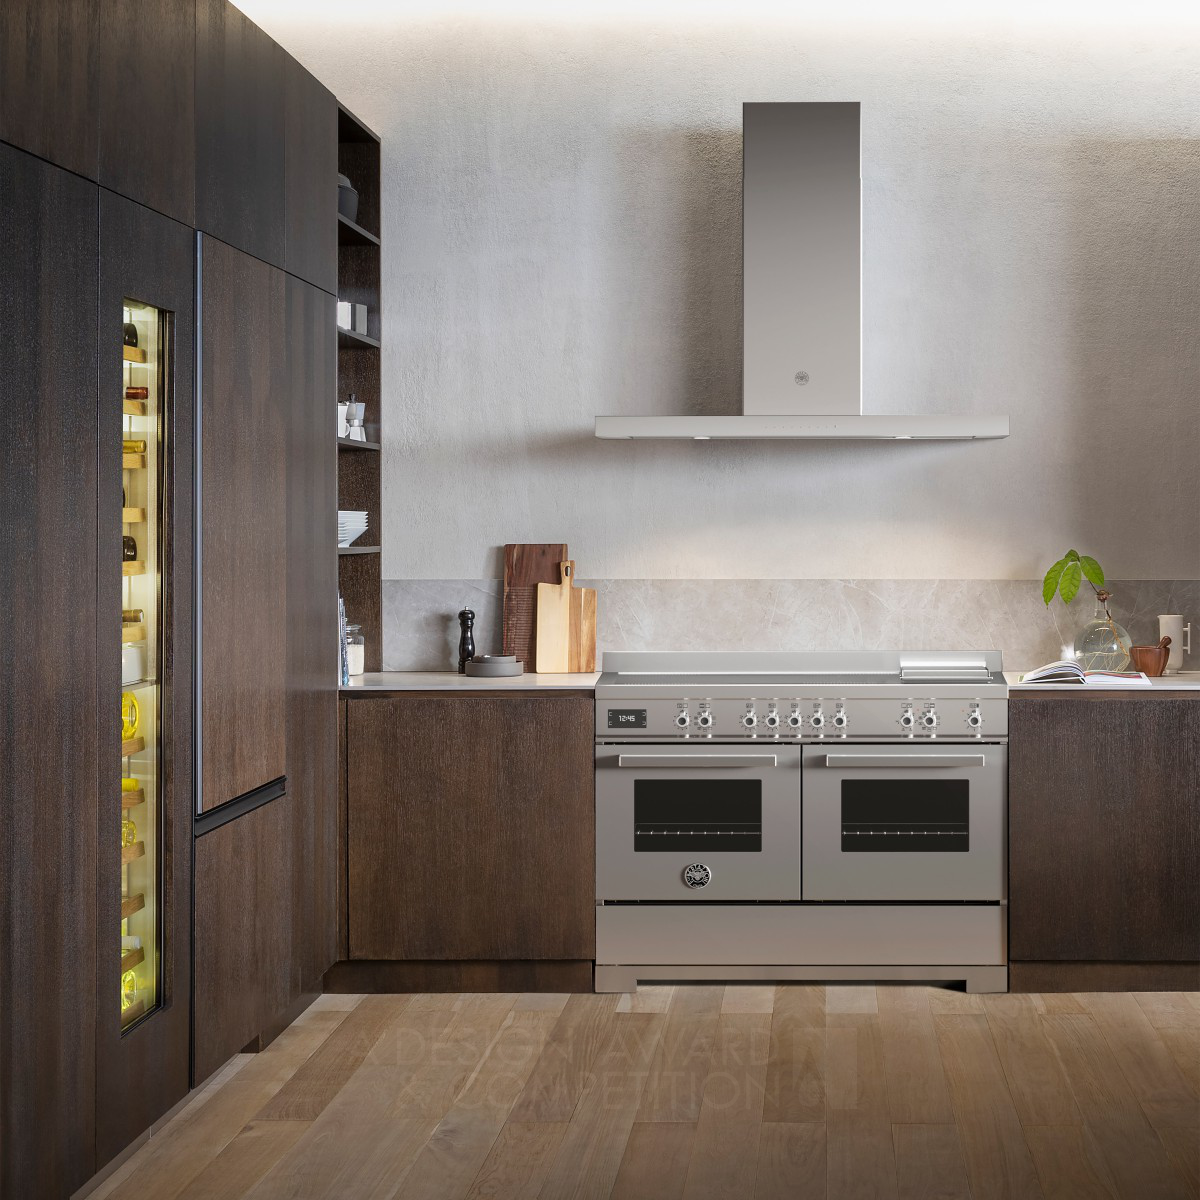 Martina Iamundo wins Silver at the prestigious A' Home Appliances Design Award with Bertazzoni Pro125I2Ext Freestanding Cooker.